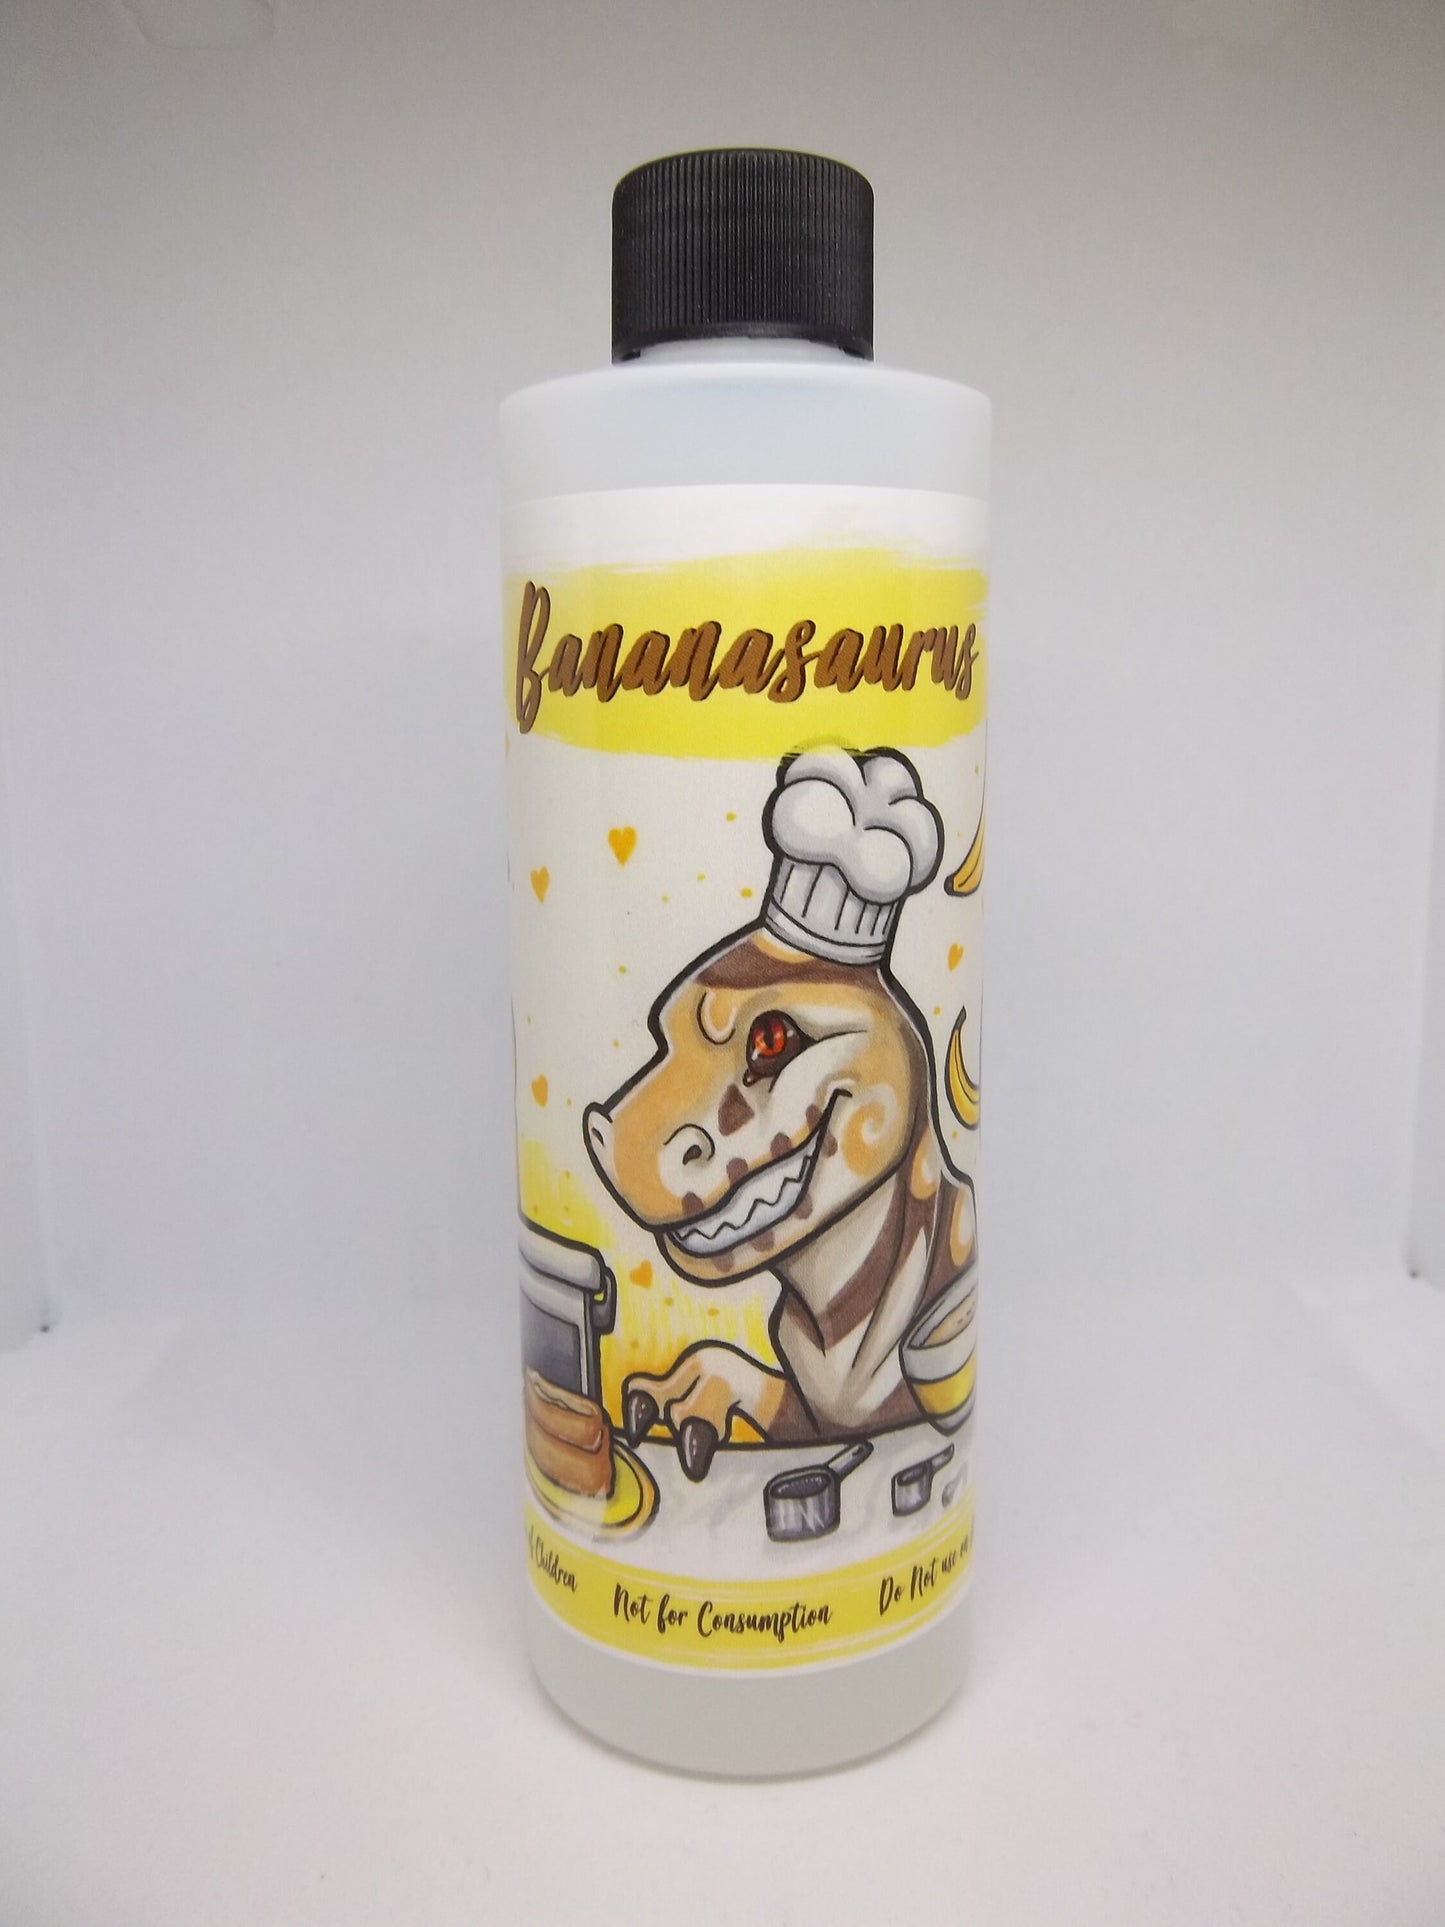 Banana Bread Fursuit Spray 8oz - Bananasaurus Fragrance and Essential Costume Cleaner